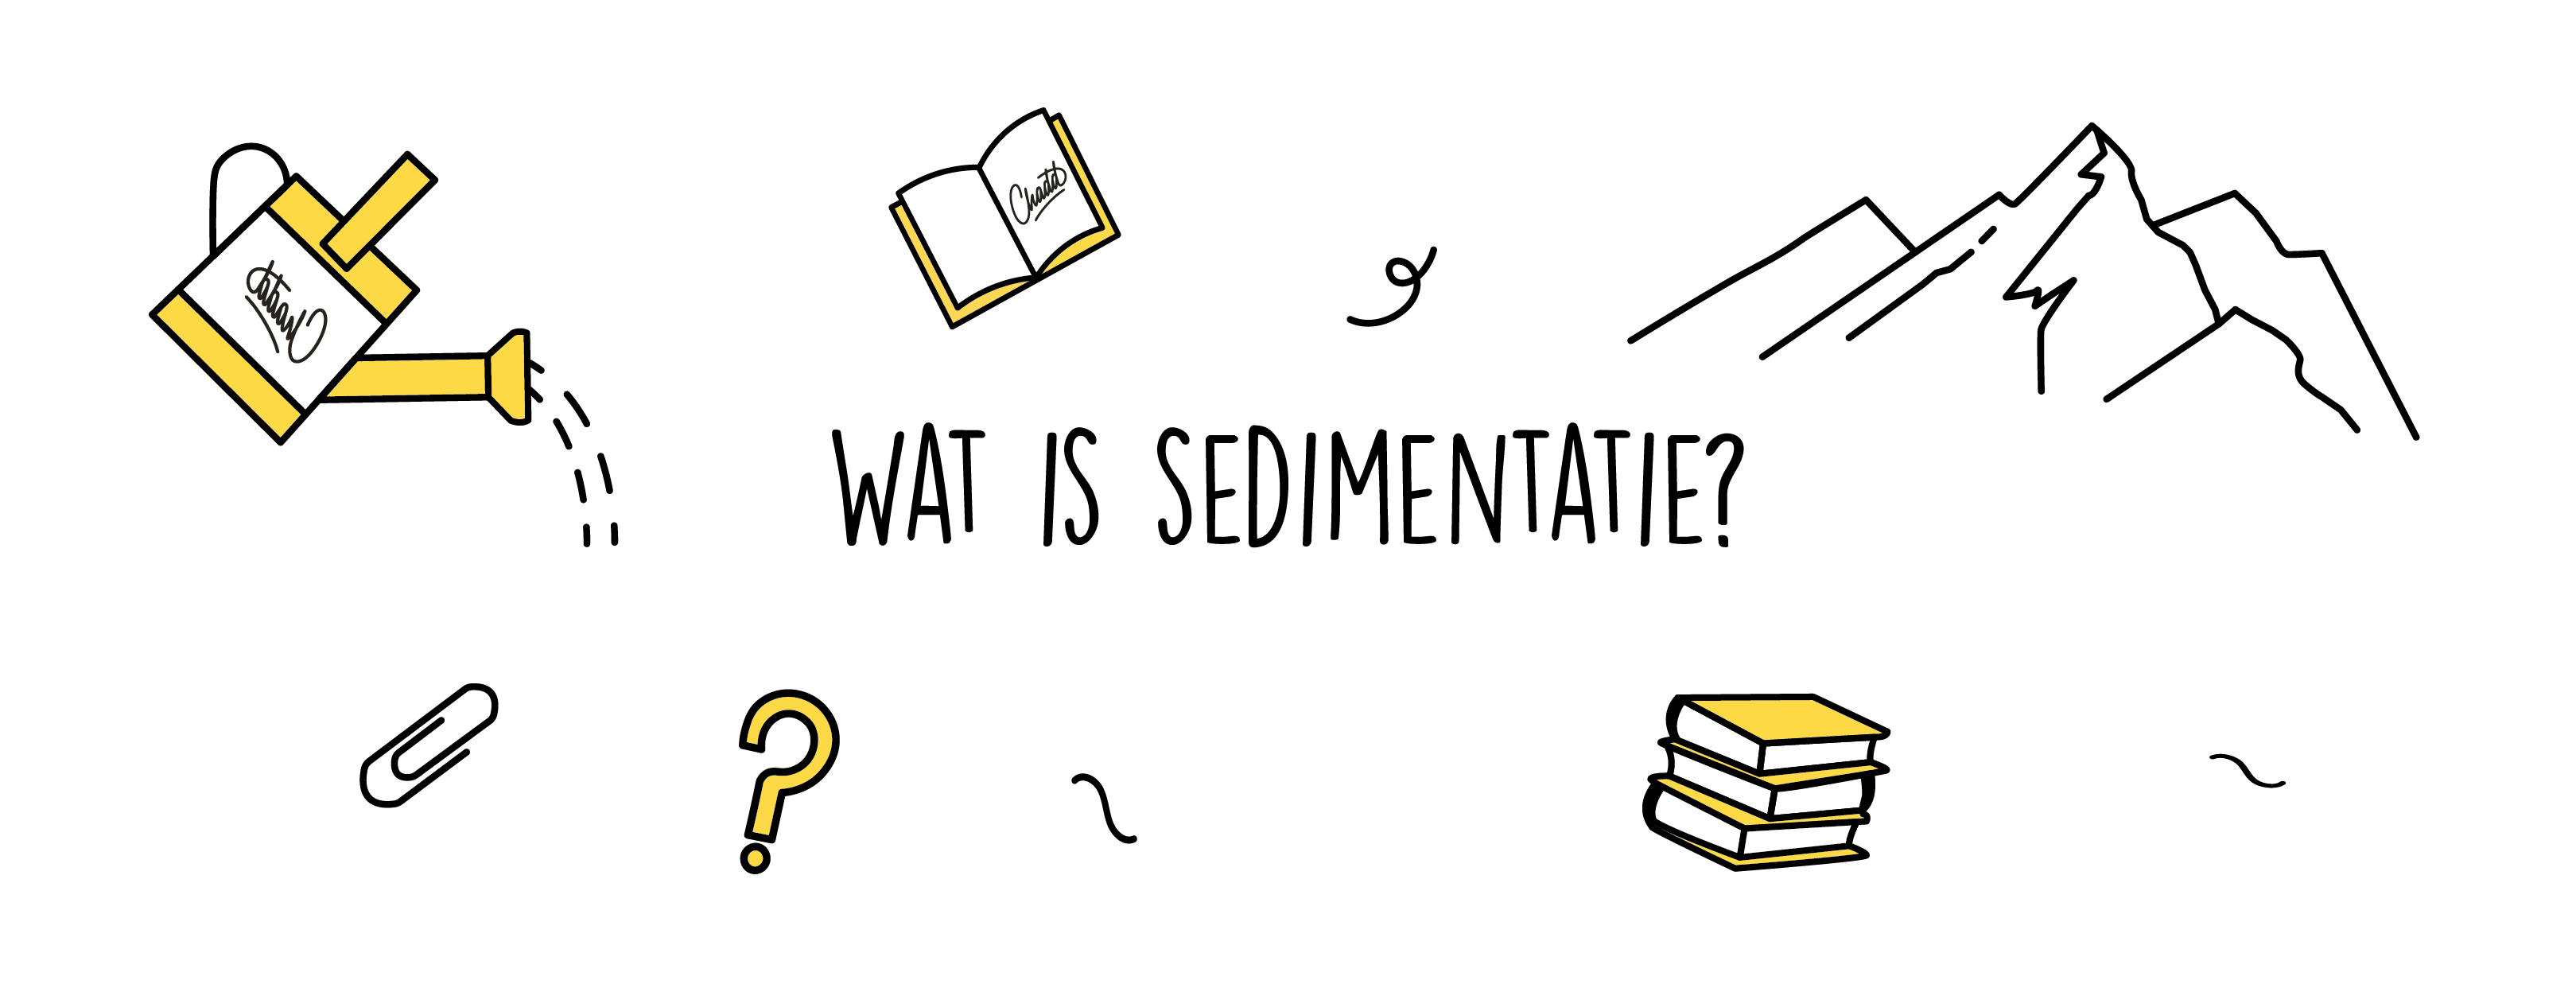 sedimentatie